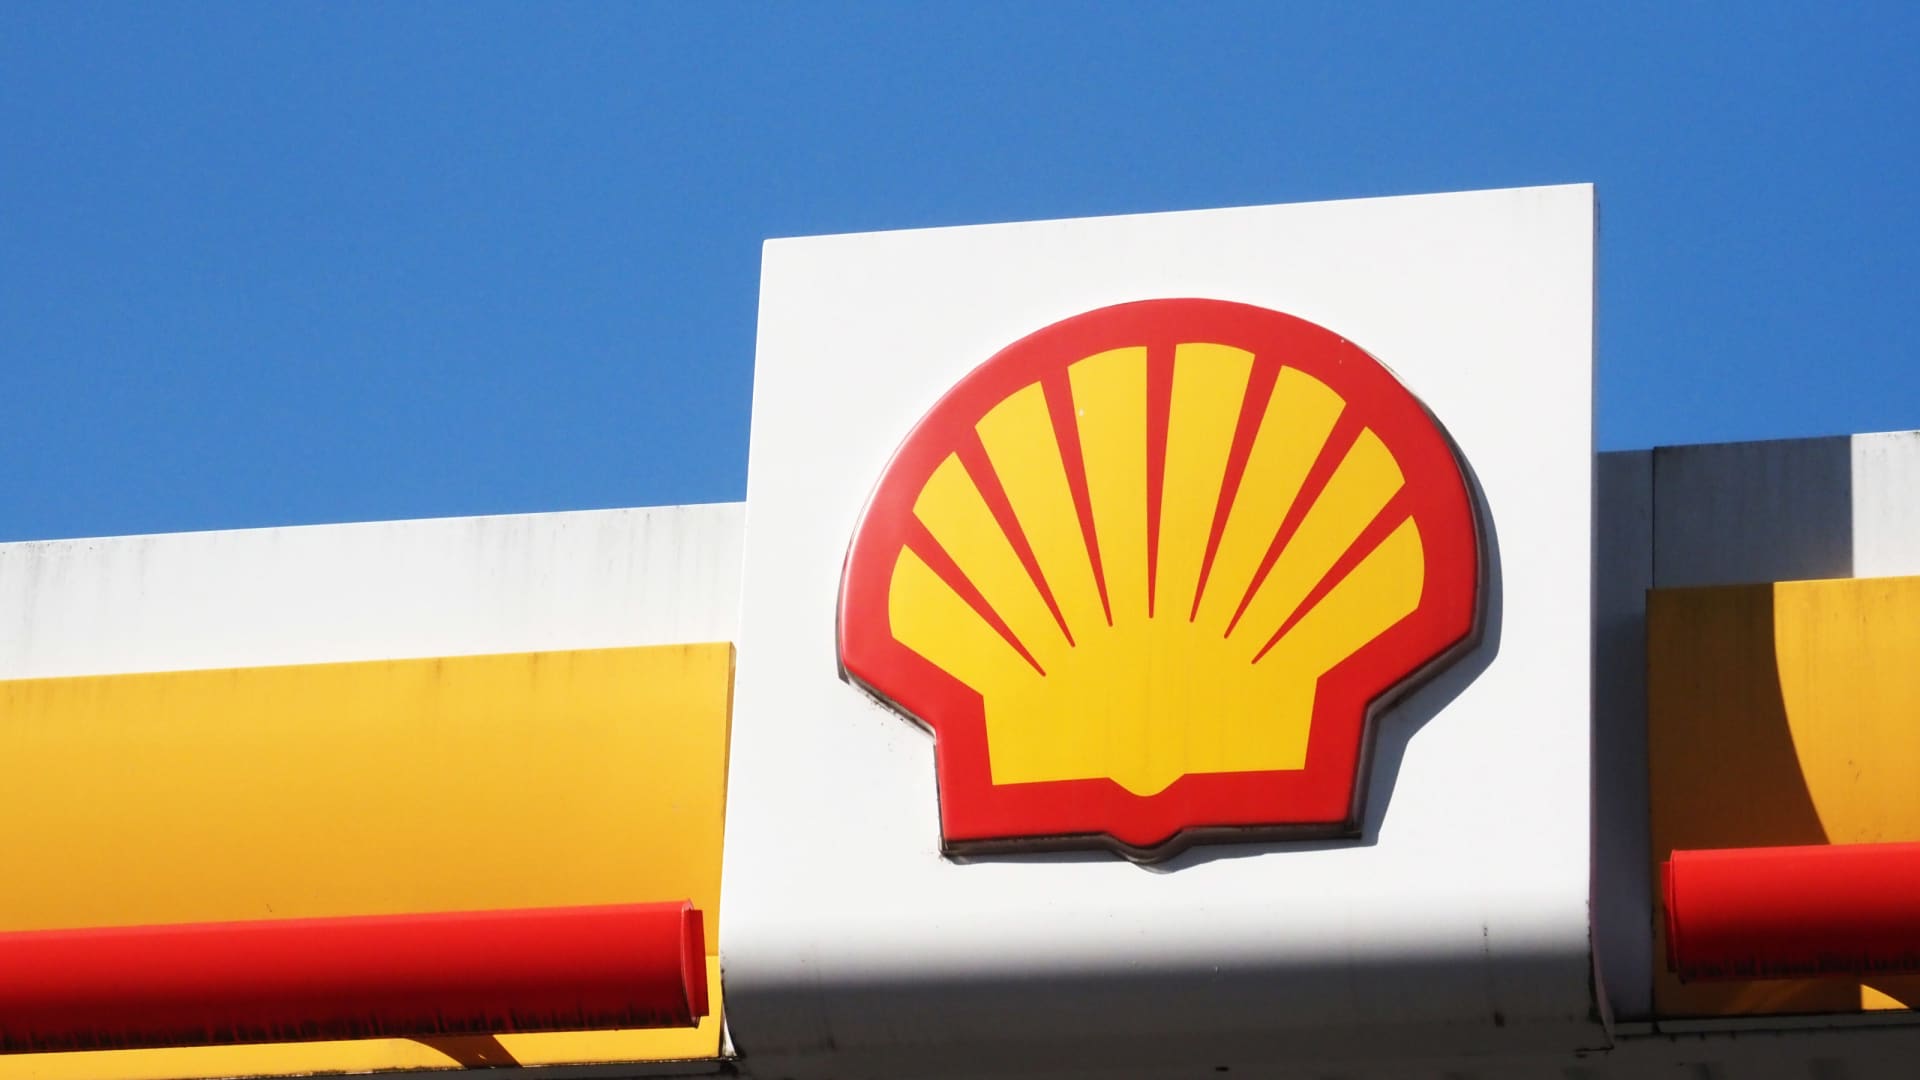 Oil giant Shell braces for shareholder revolt over climate plans after record profits